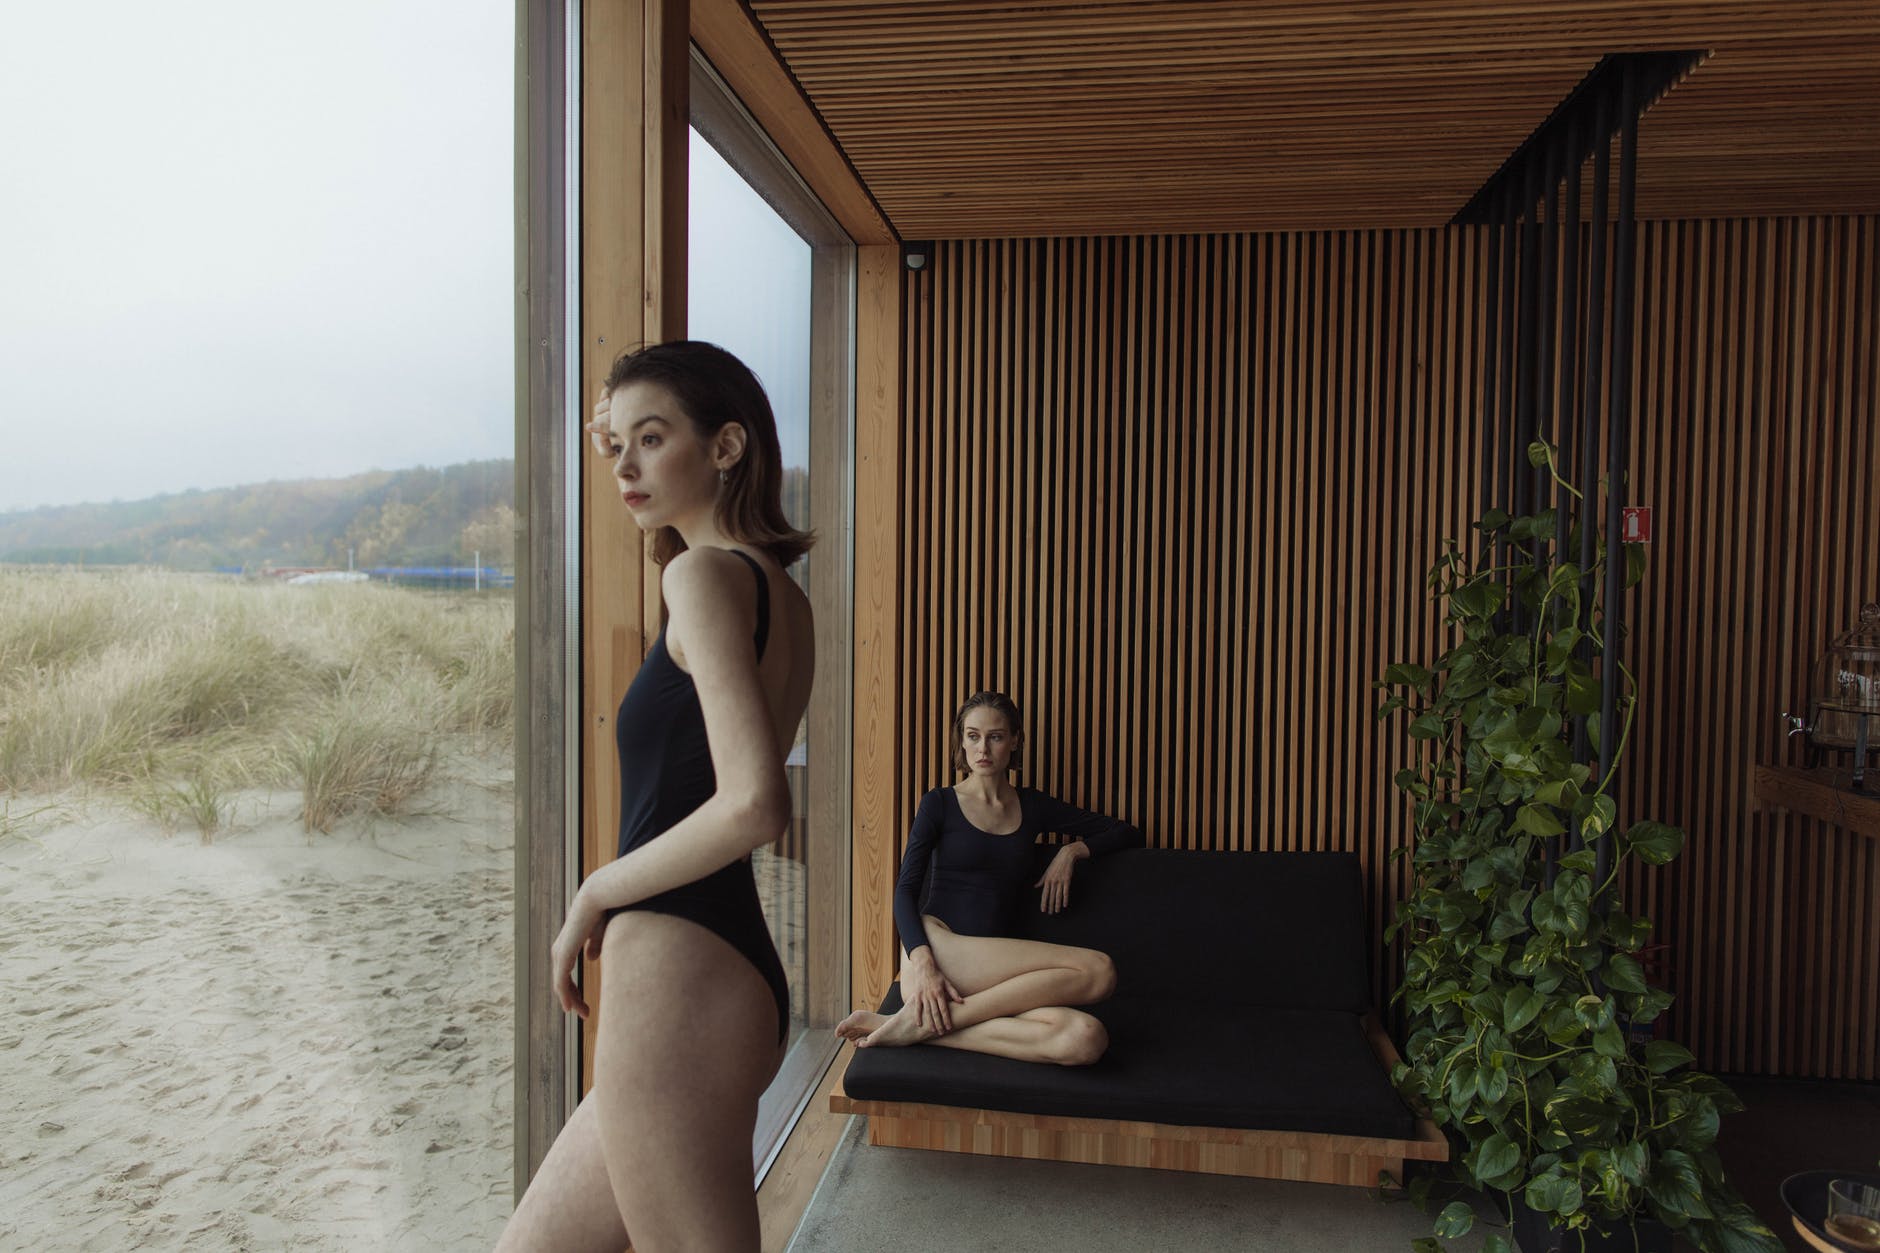 Život u paklu anoreksije 

woman in black tank top and black shorts sitting on brown wooden bench